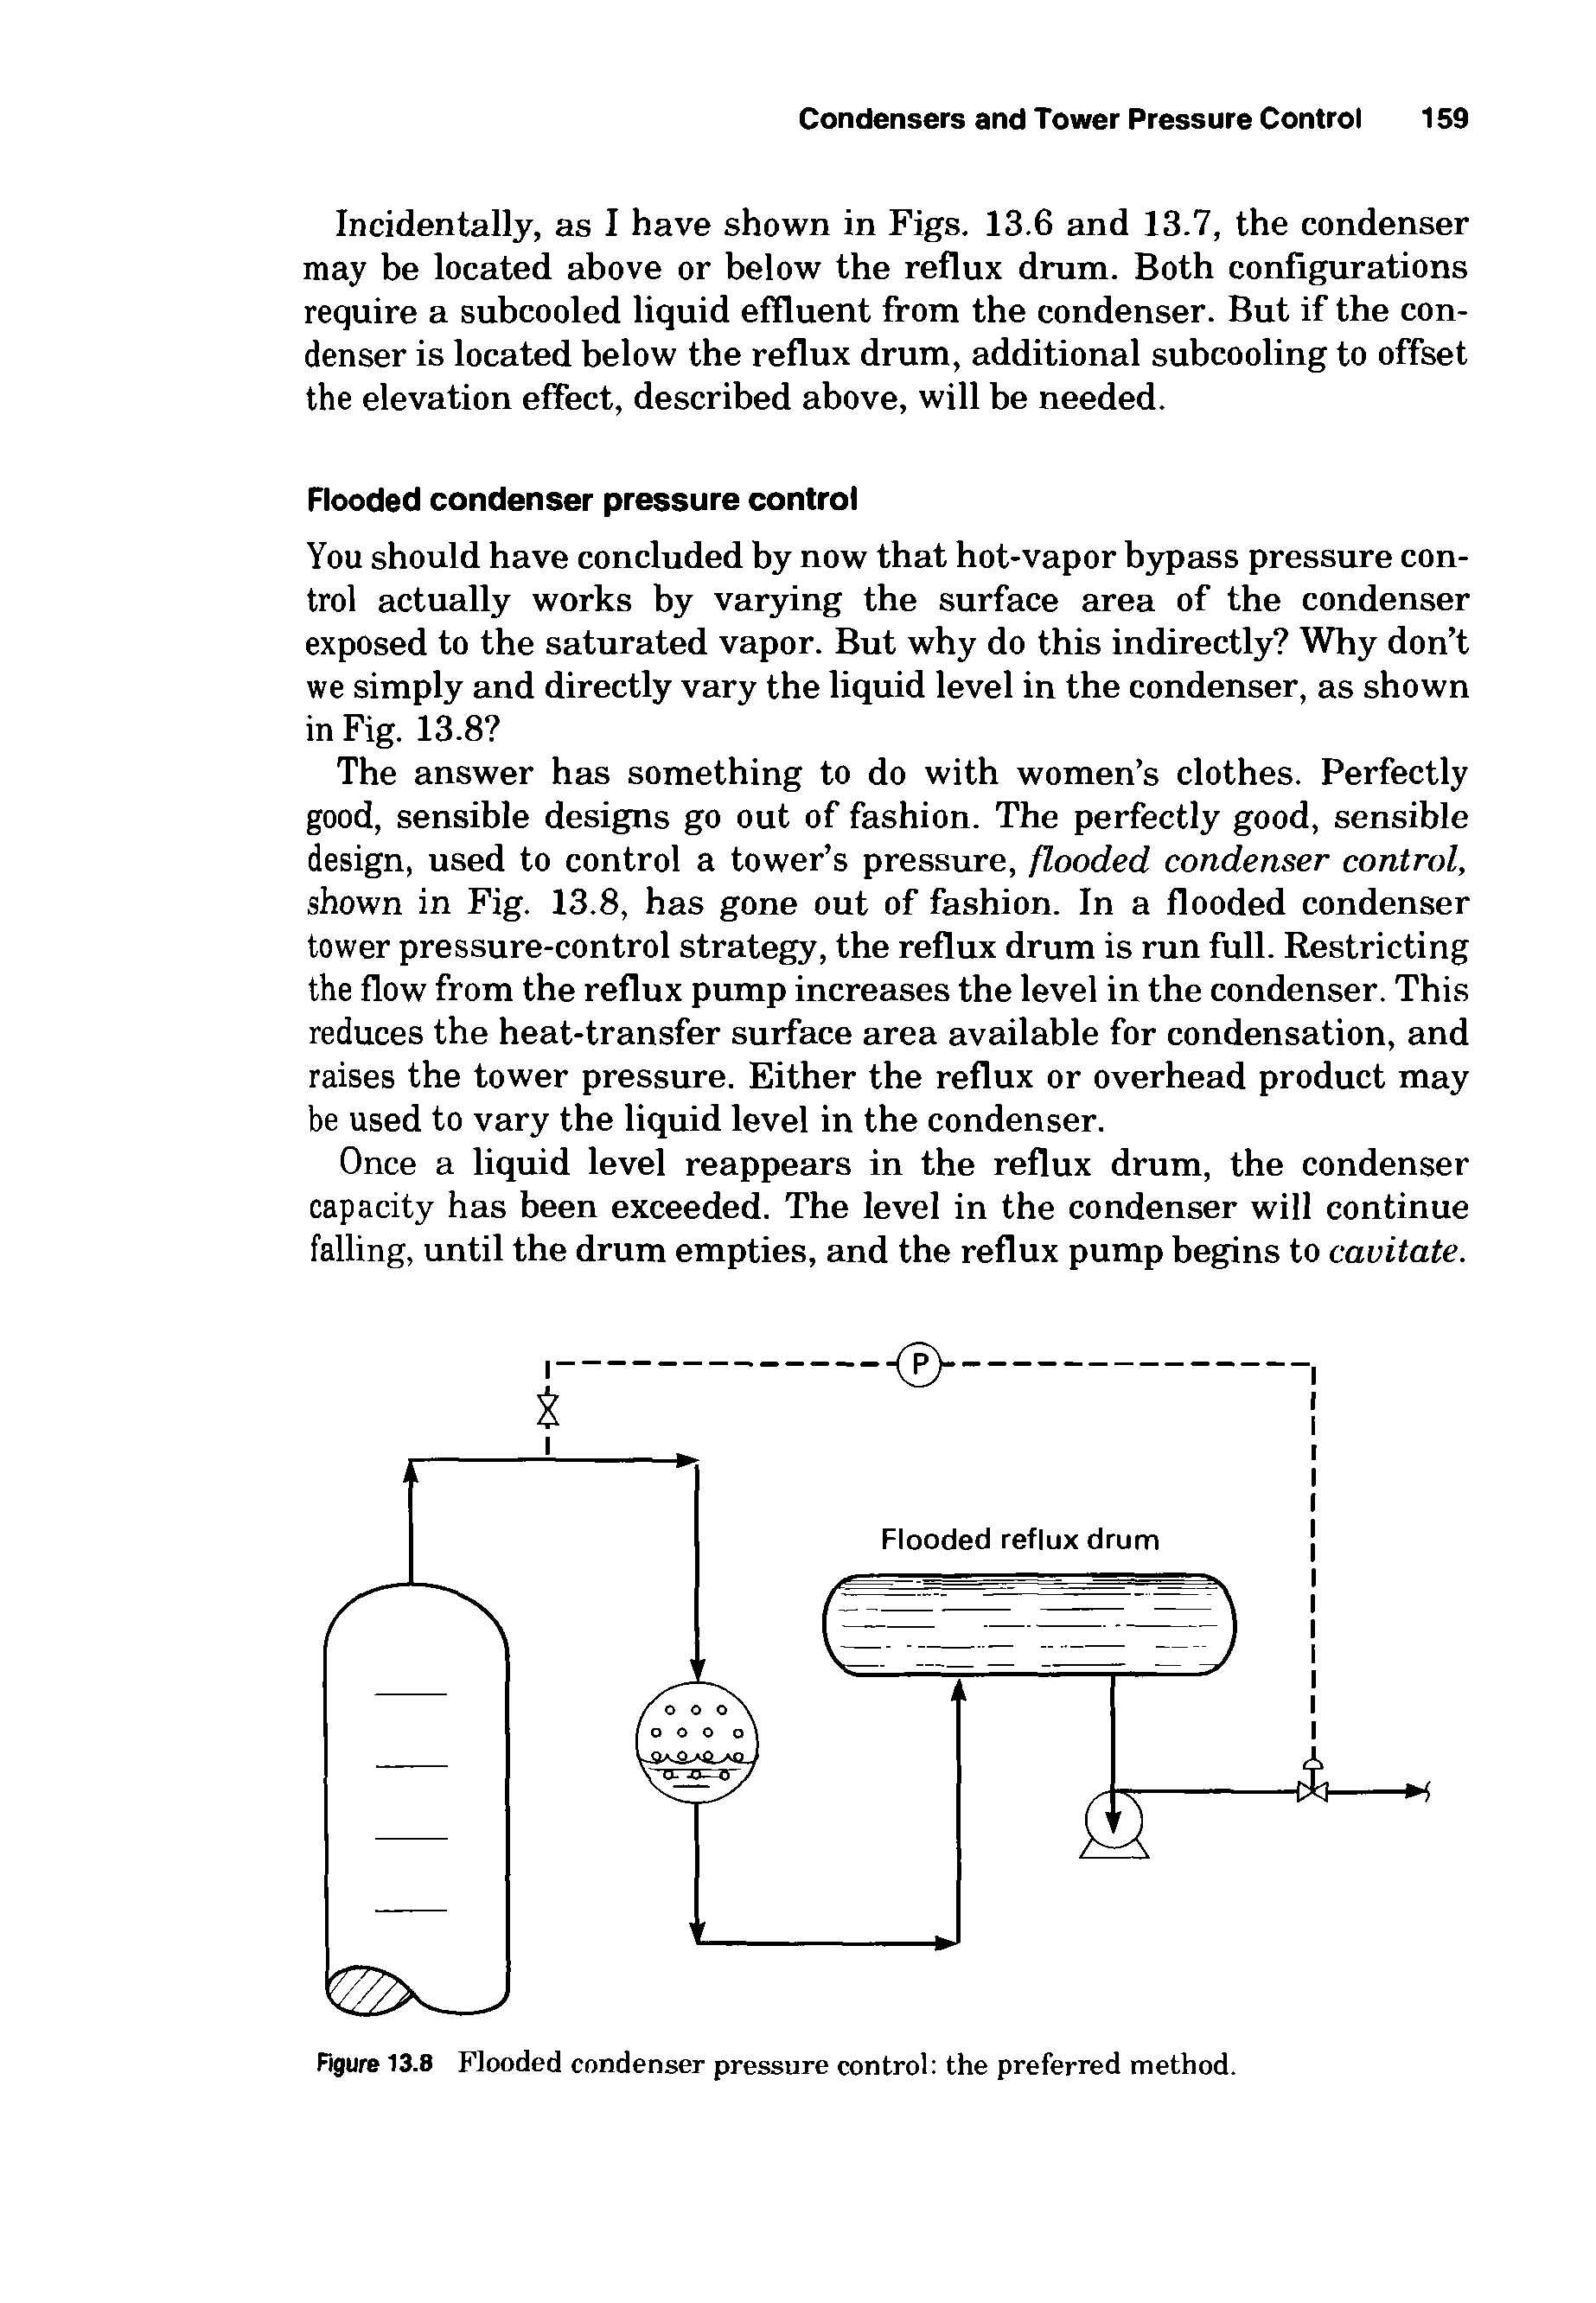 Figure 13.8 Flooded condenser pressure control the preferred method.